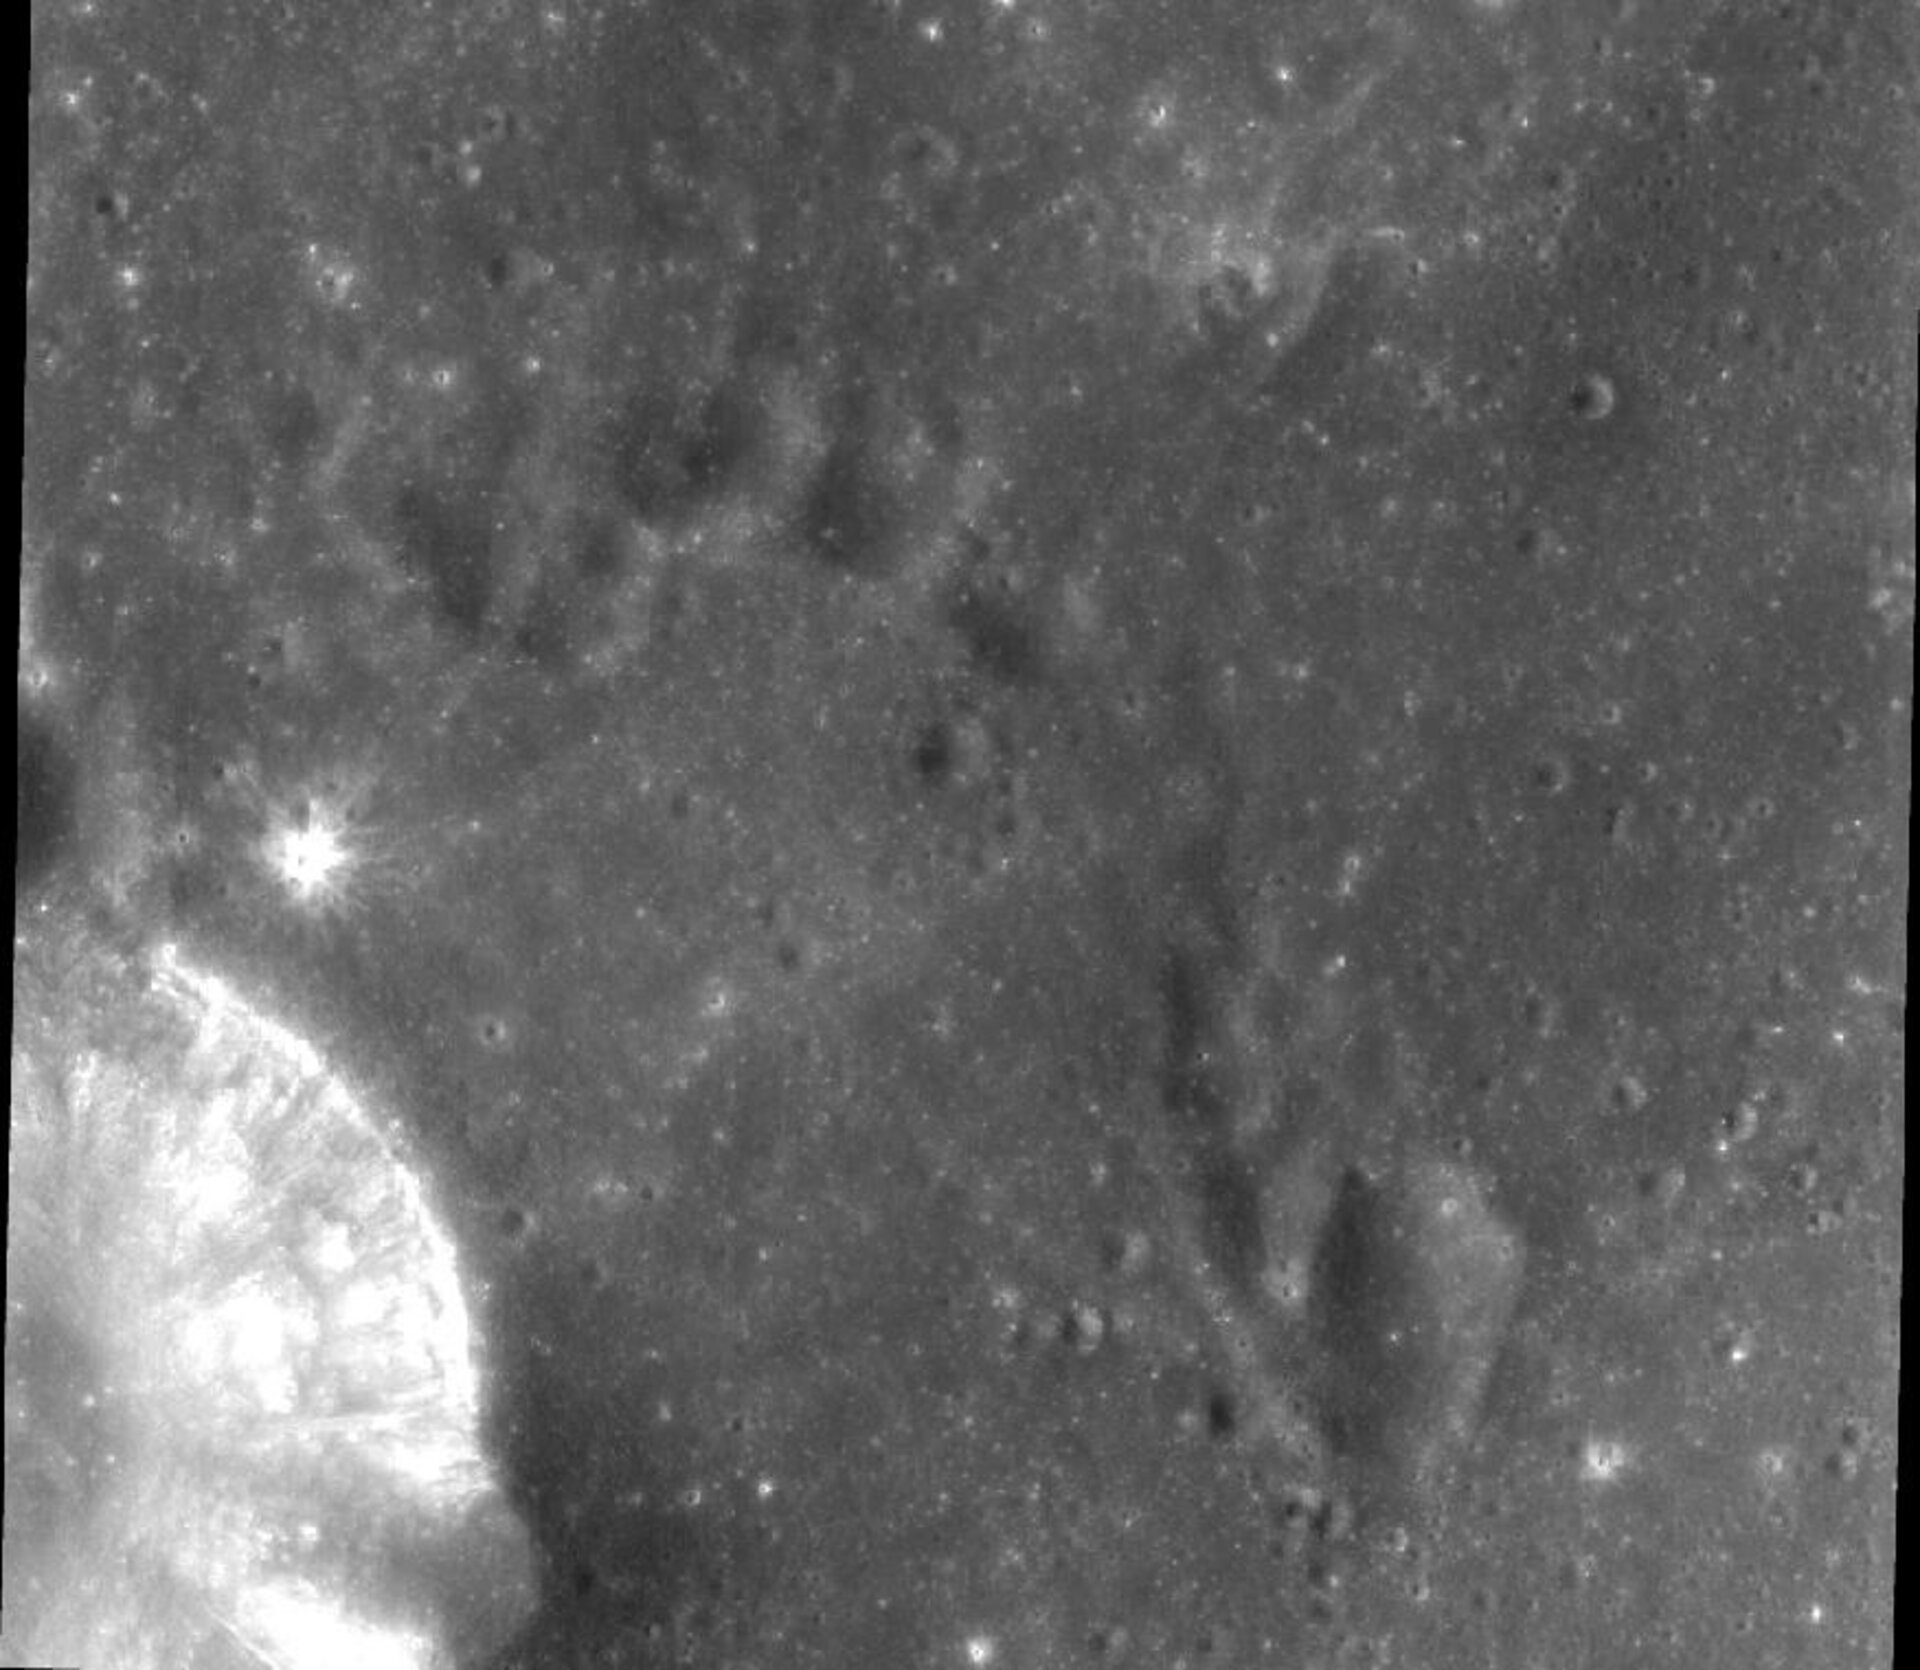 Chandrayaan-1 image of the Moon's surface